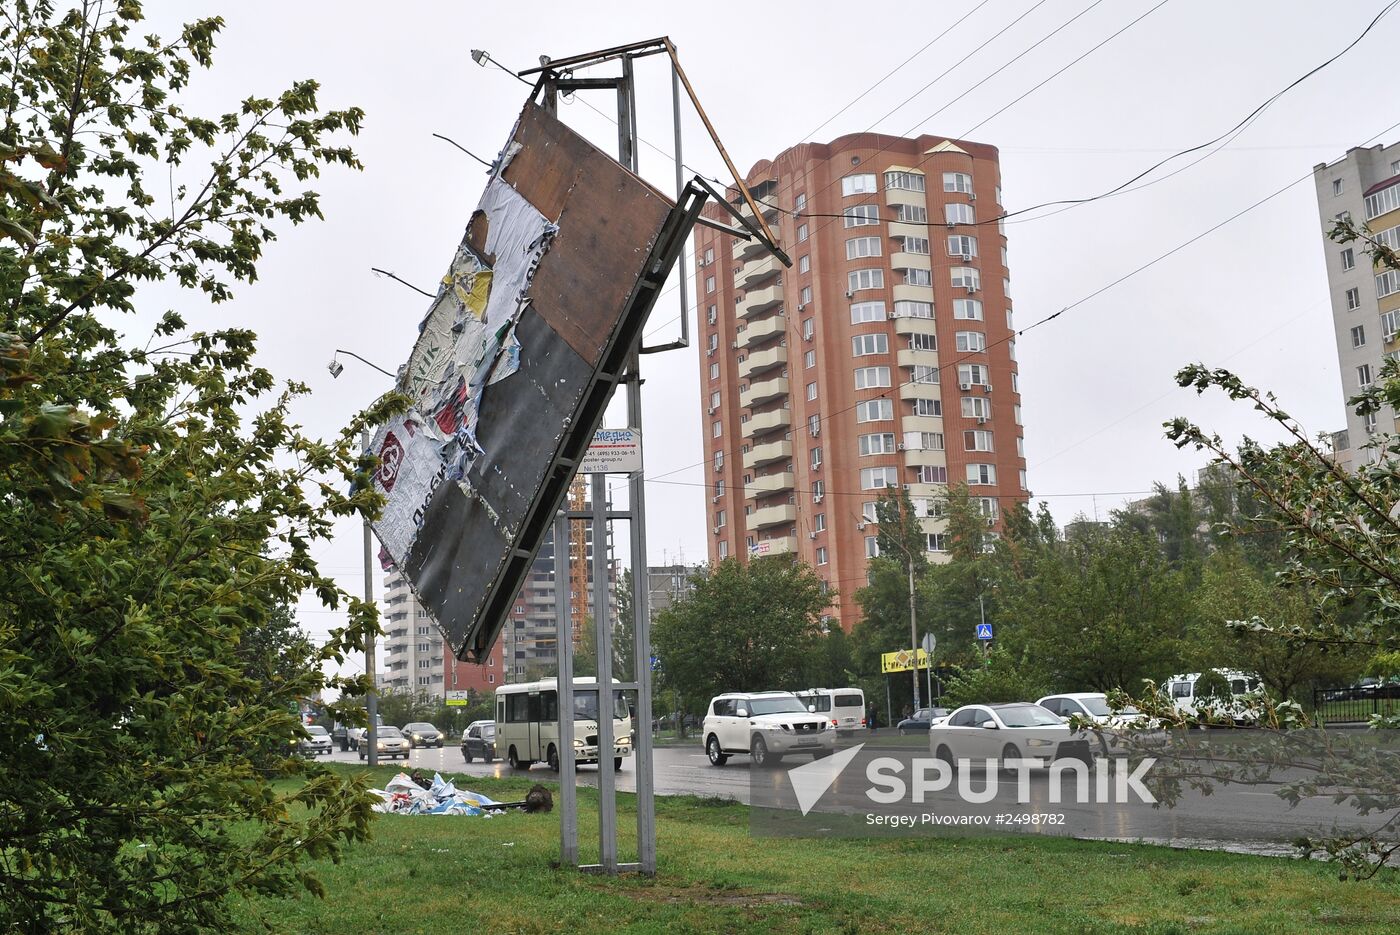 Aftermath of torrential rain in the Rostov Region